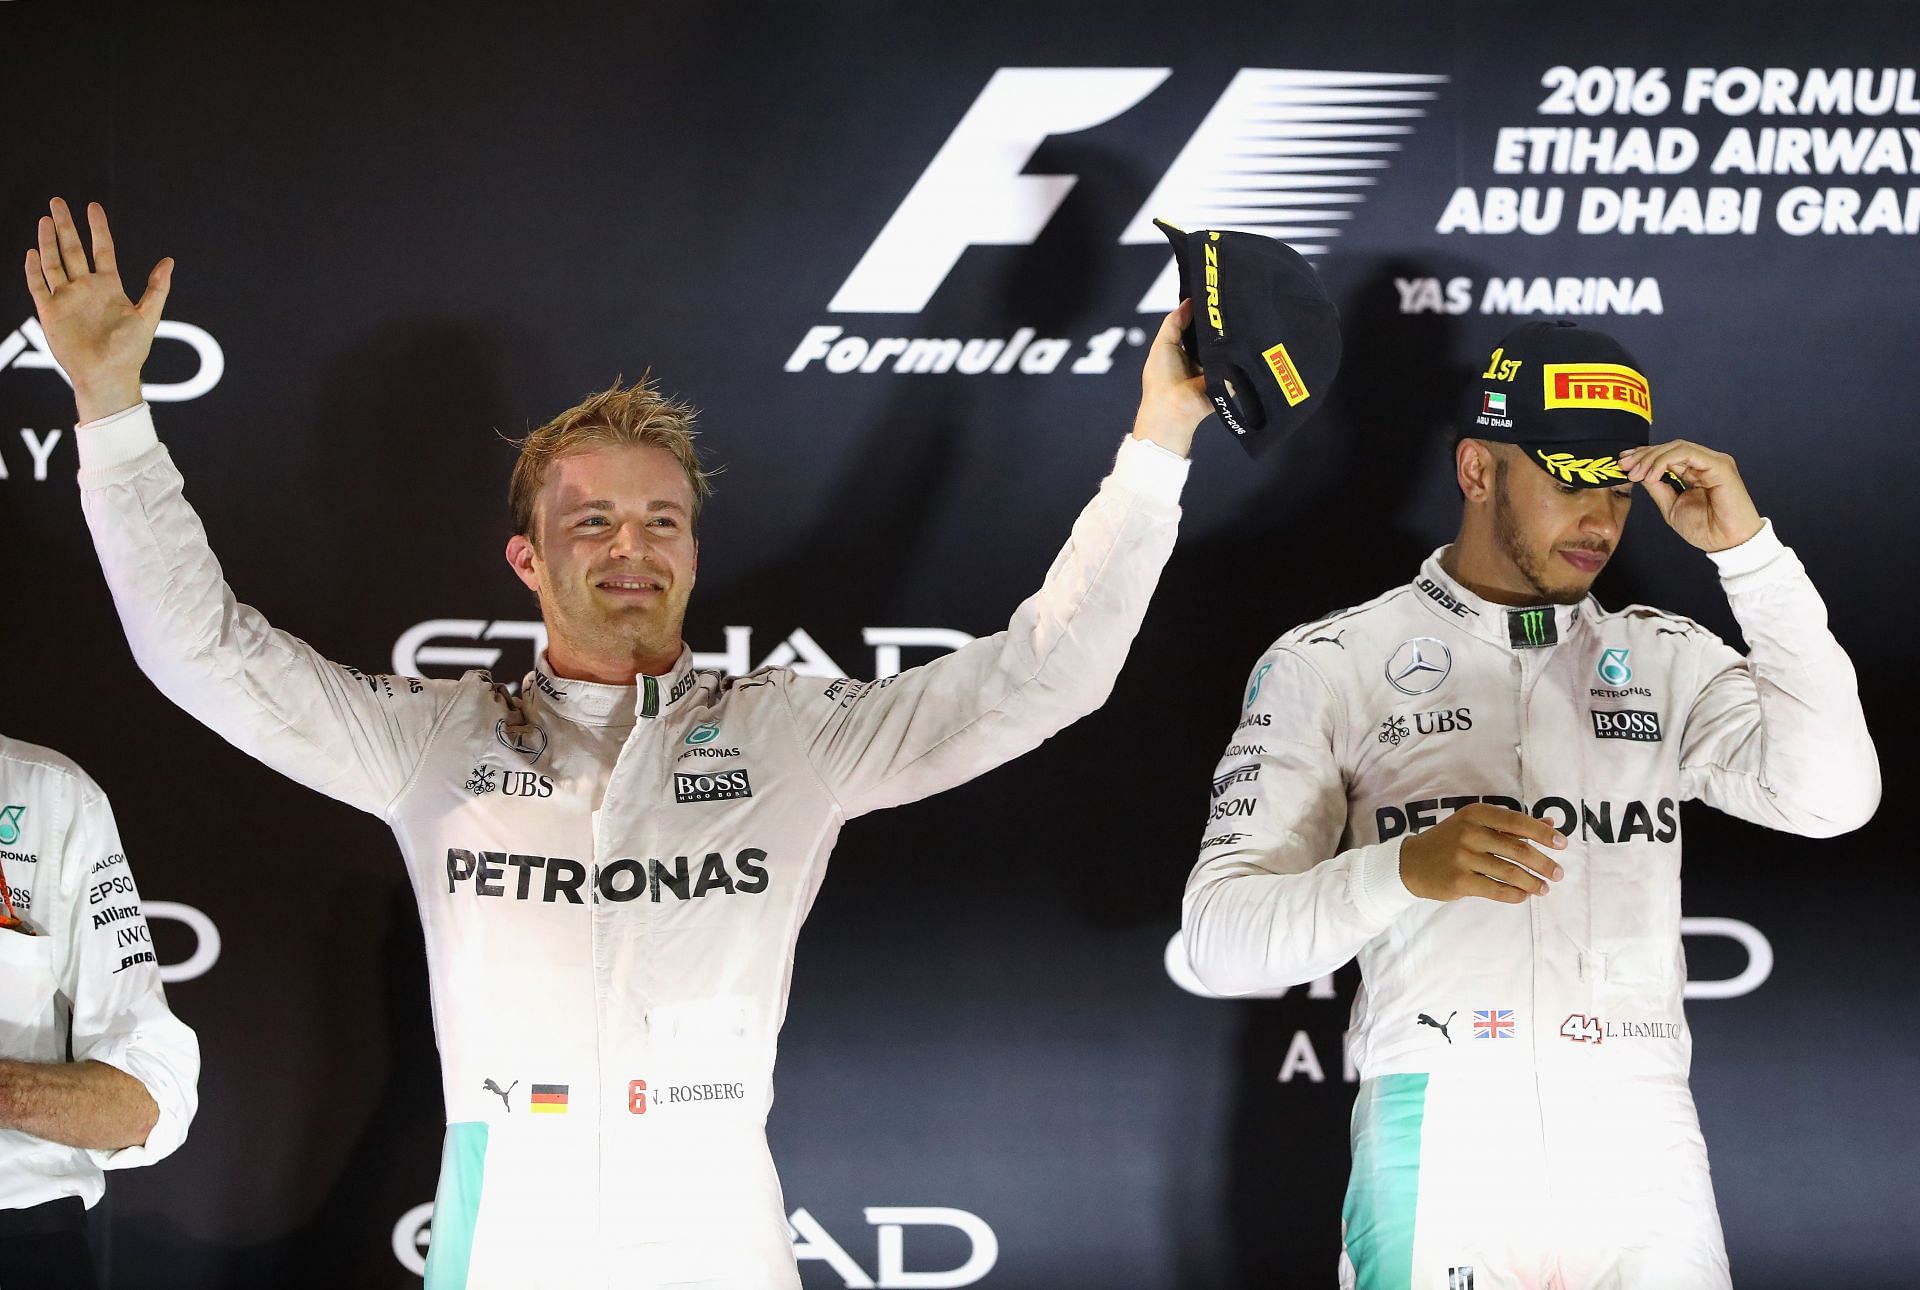  Nico Rosberg and Lewis Hamilton on the podium during the Abu Dhabi Formula One Grand Prix at Yas Marina Circuit on November 27, 2016, in Abu Dhabi, United Arab Emirates (Photo by Clive Mason/Getty Images)